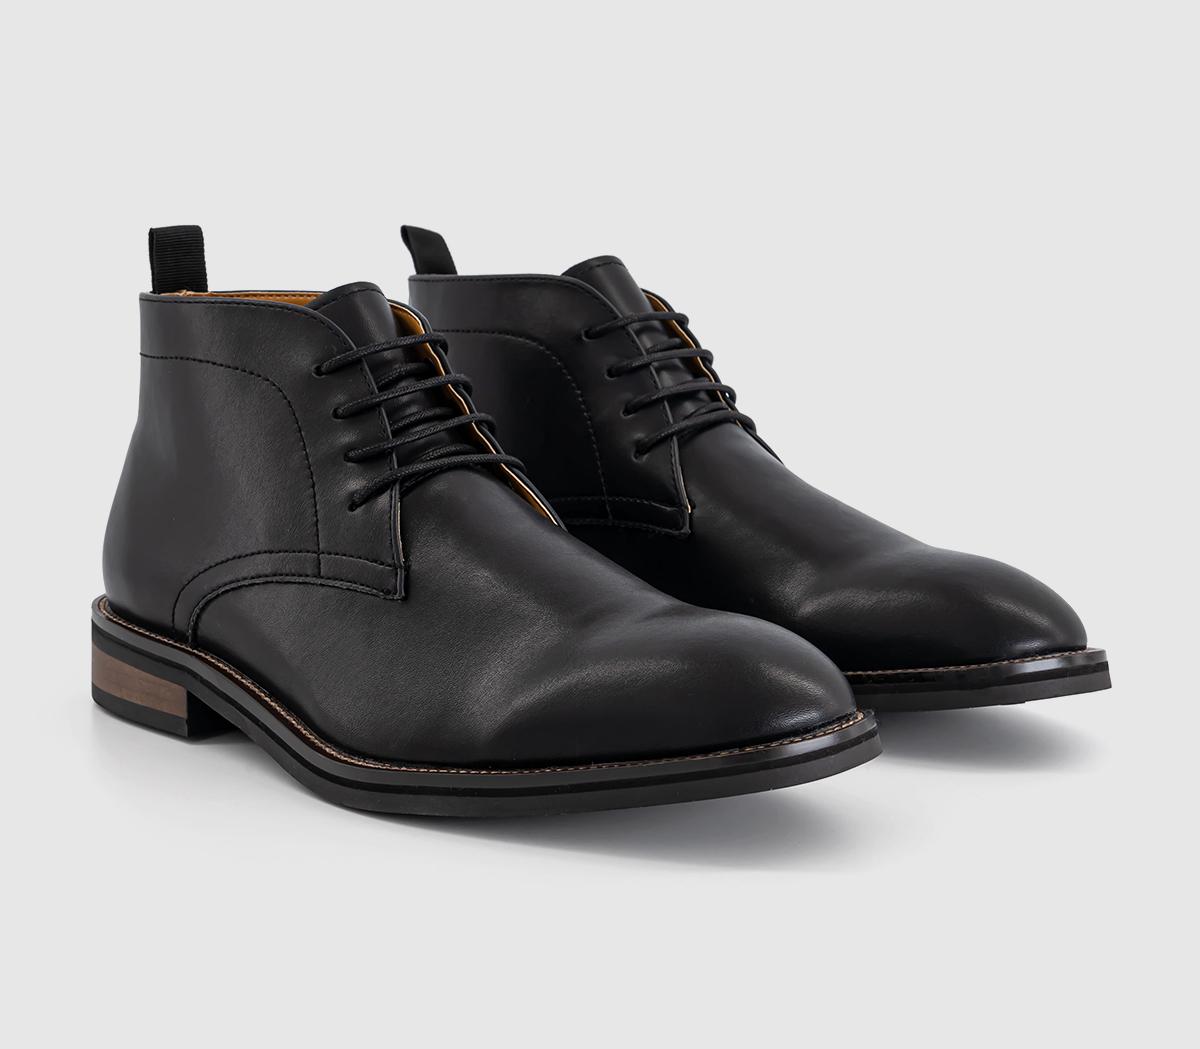 OFFICE Belsize Smart Chukka Boots Black - Men’s Boots